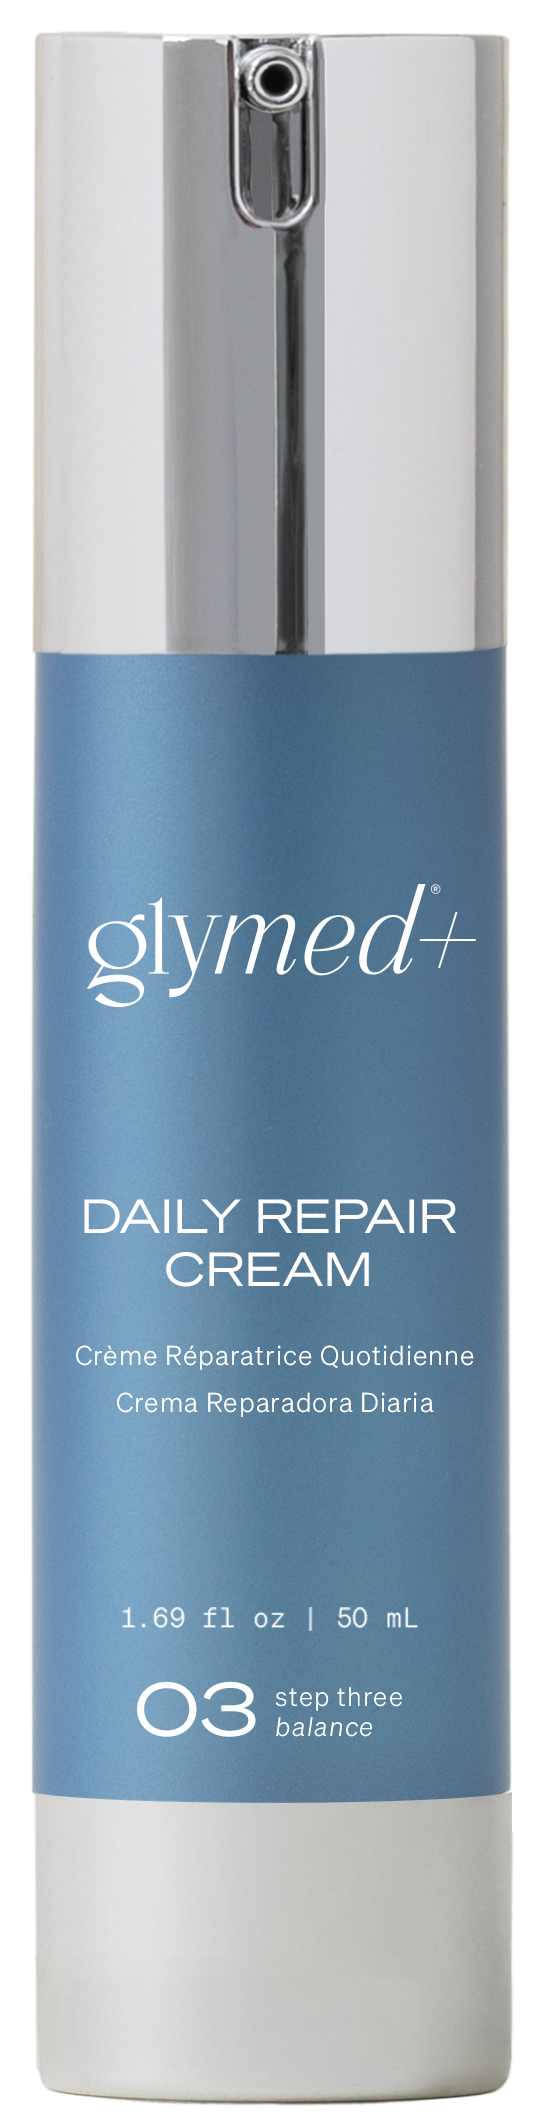 Daily Repair Cream